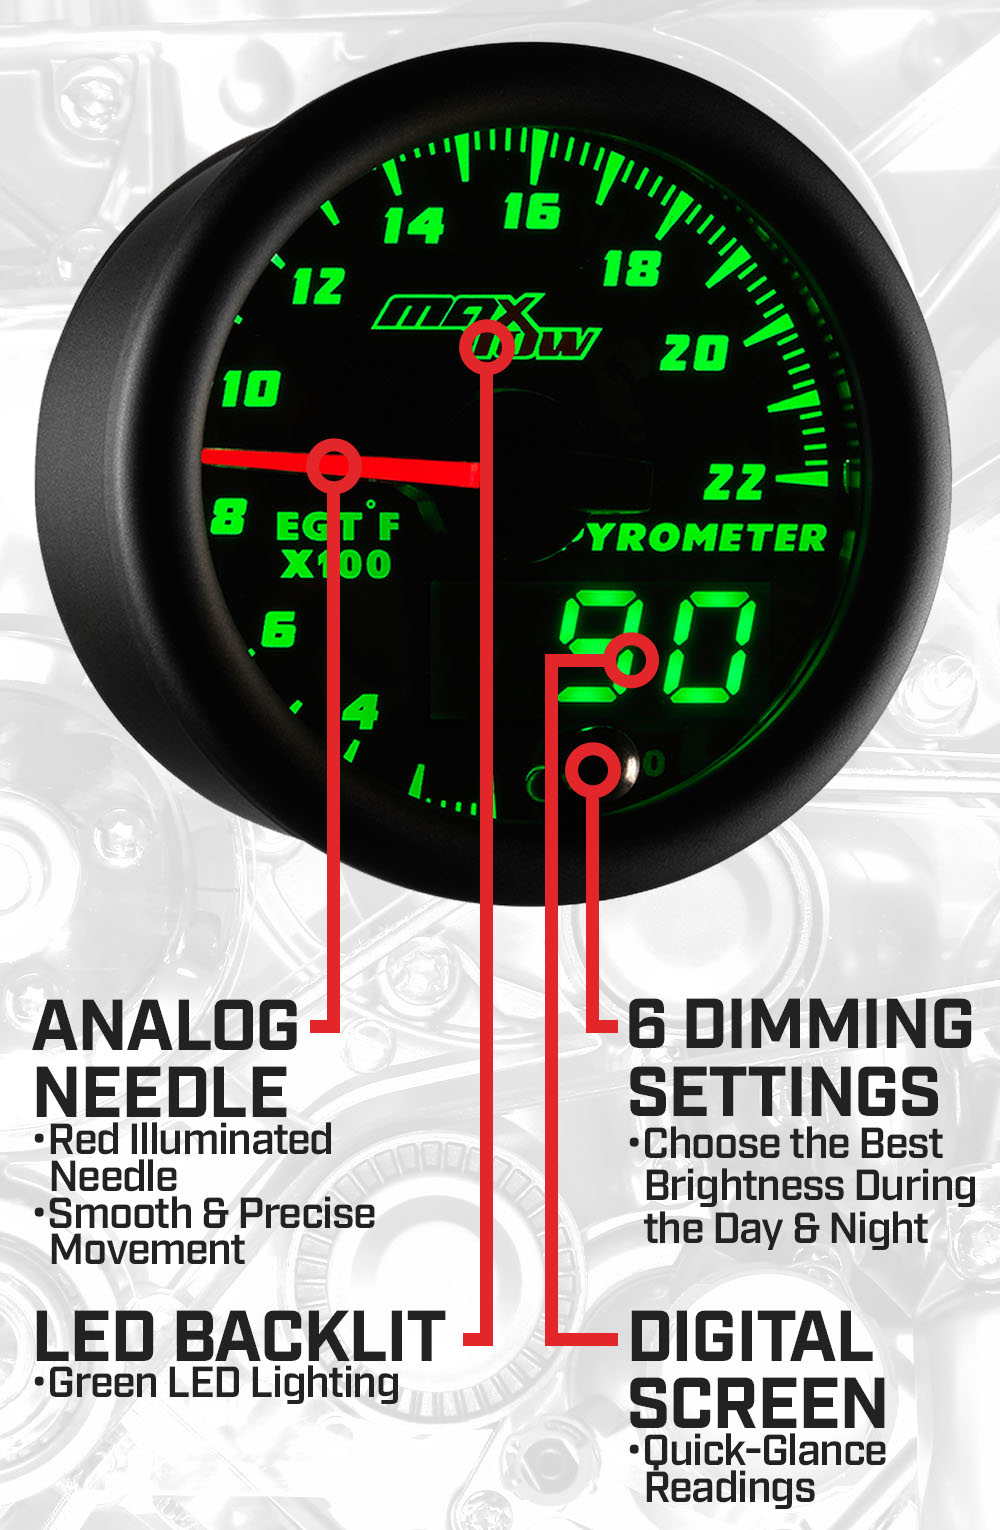 Black & Green Double Vision 2200F Pyrometer EGT Gauge Features